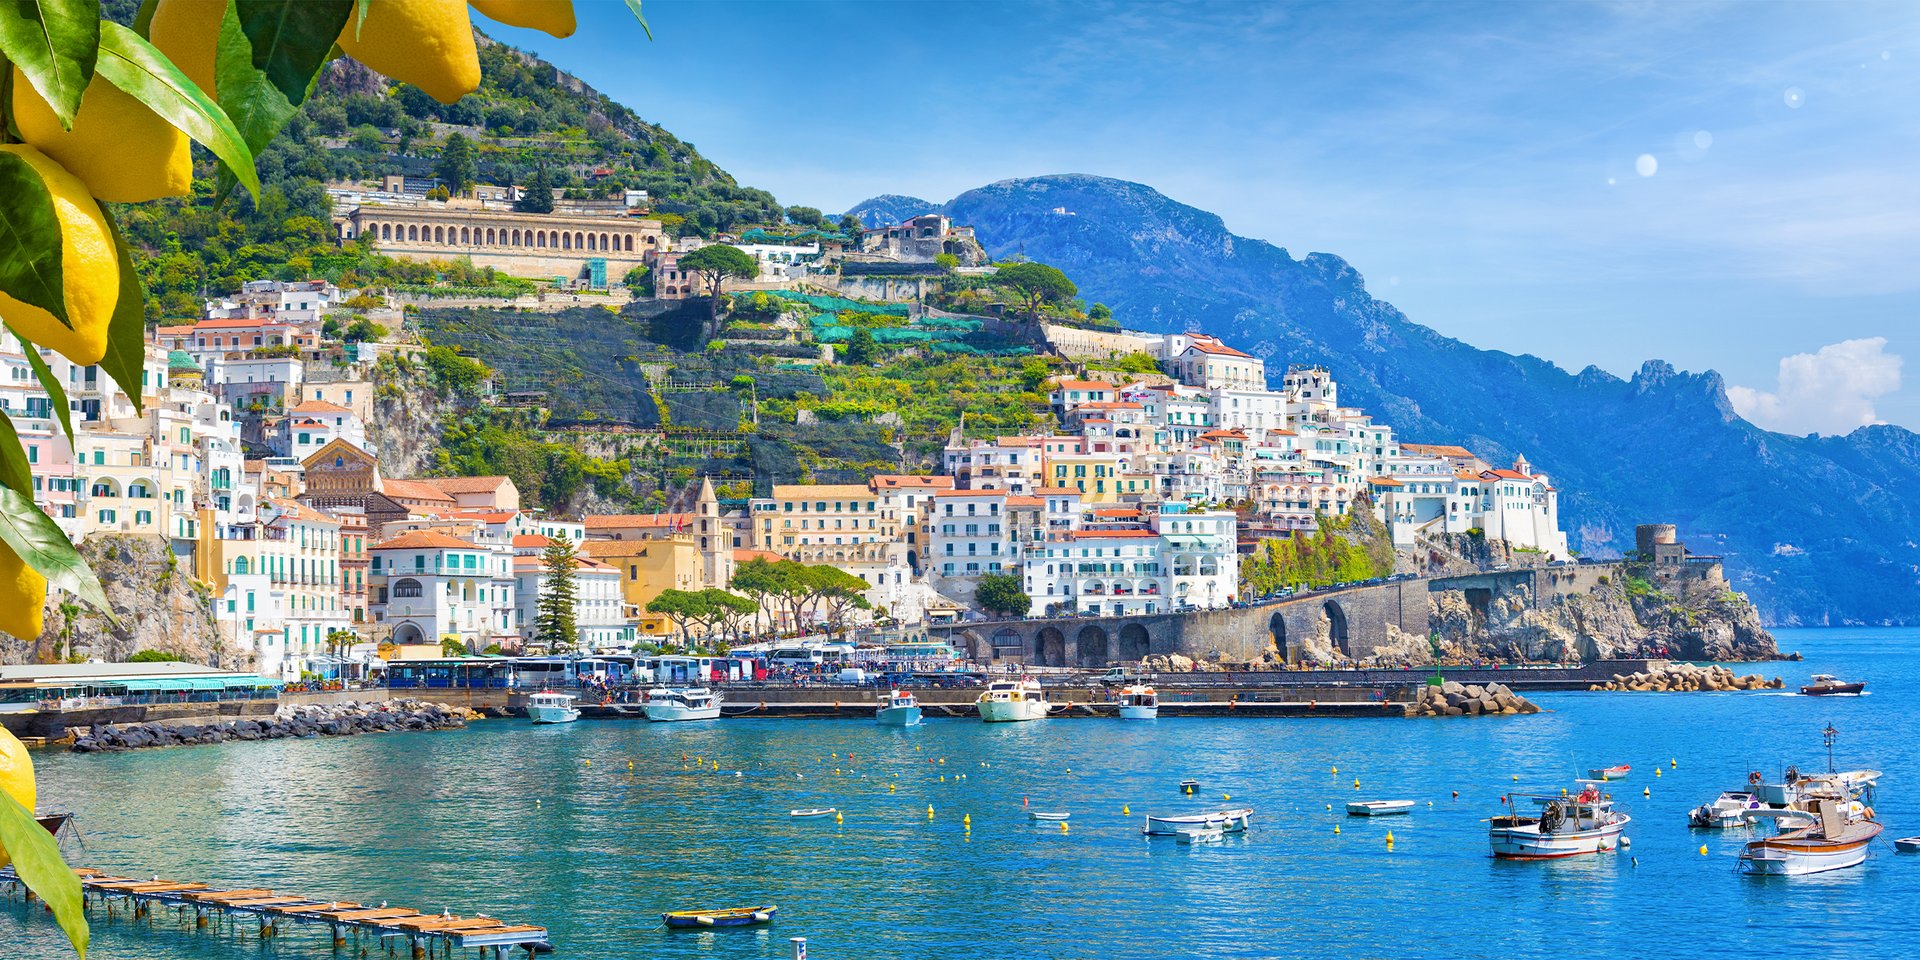 The Amalfi Coast region affords travelers spectacular views, glamorous hotels, and idyllic towns.